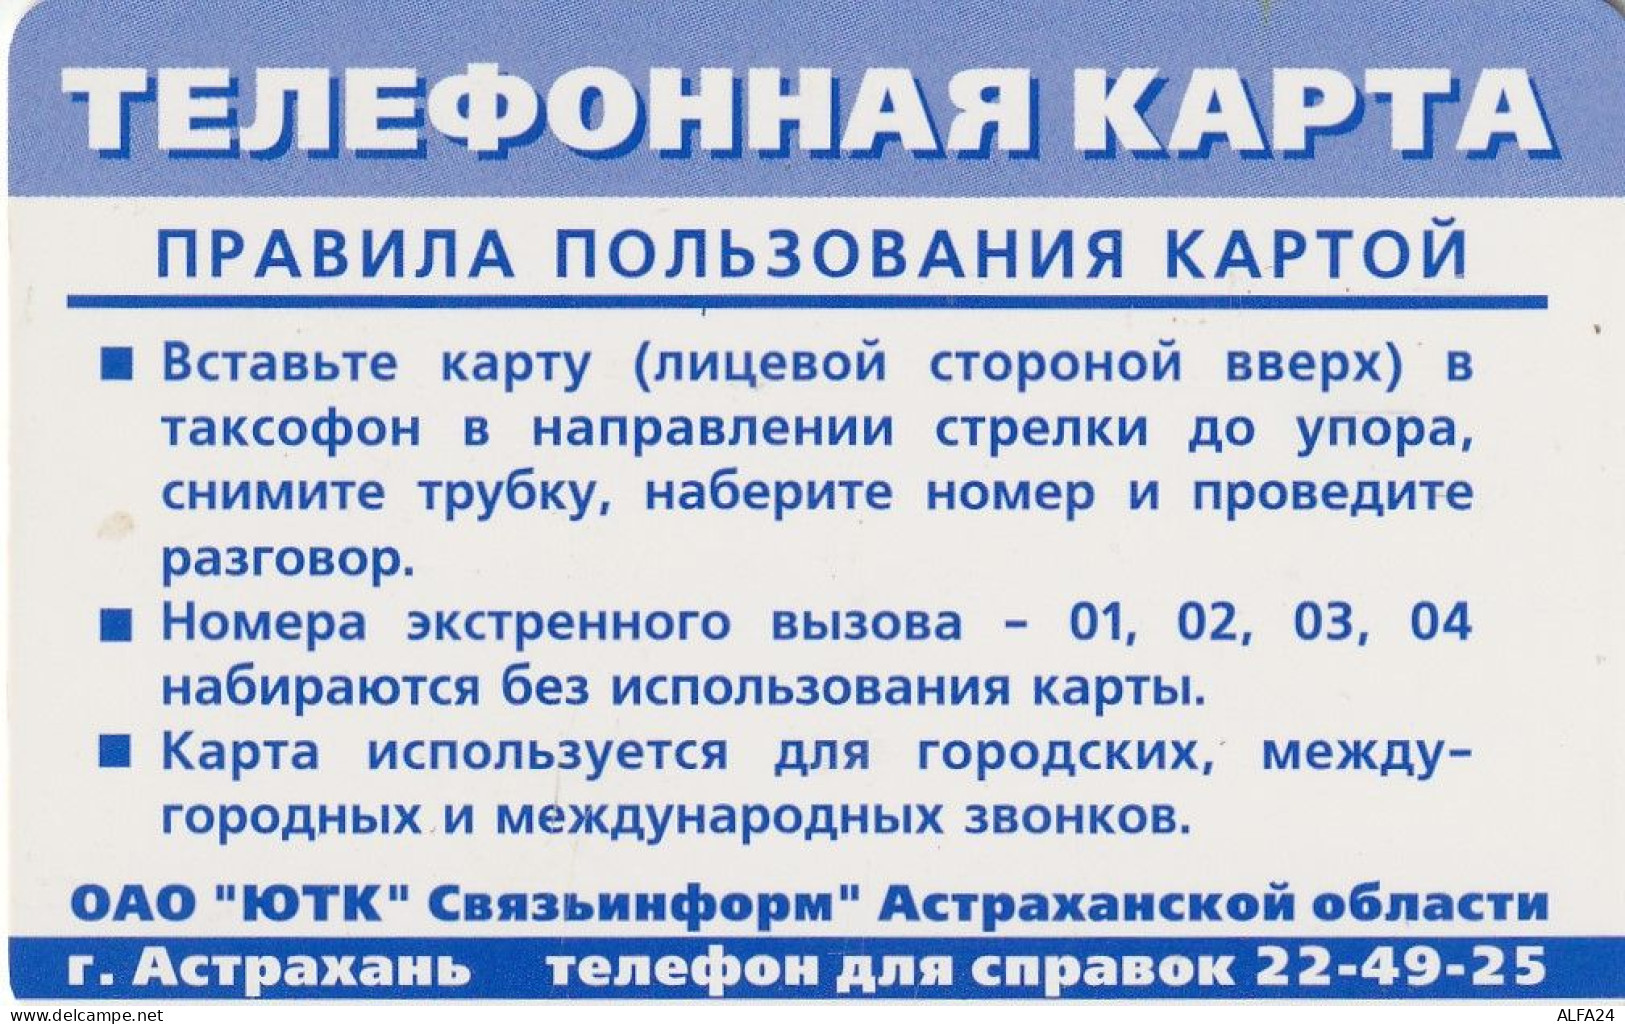 PHONE CARD RUSSIA Astrakhan (RUS73.8 - Russie